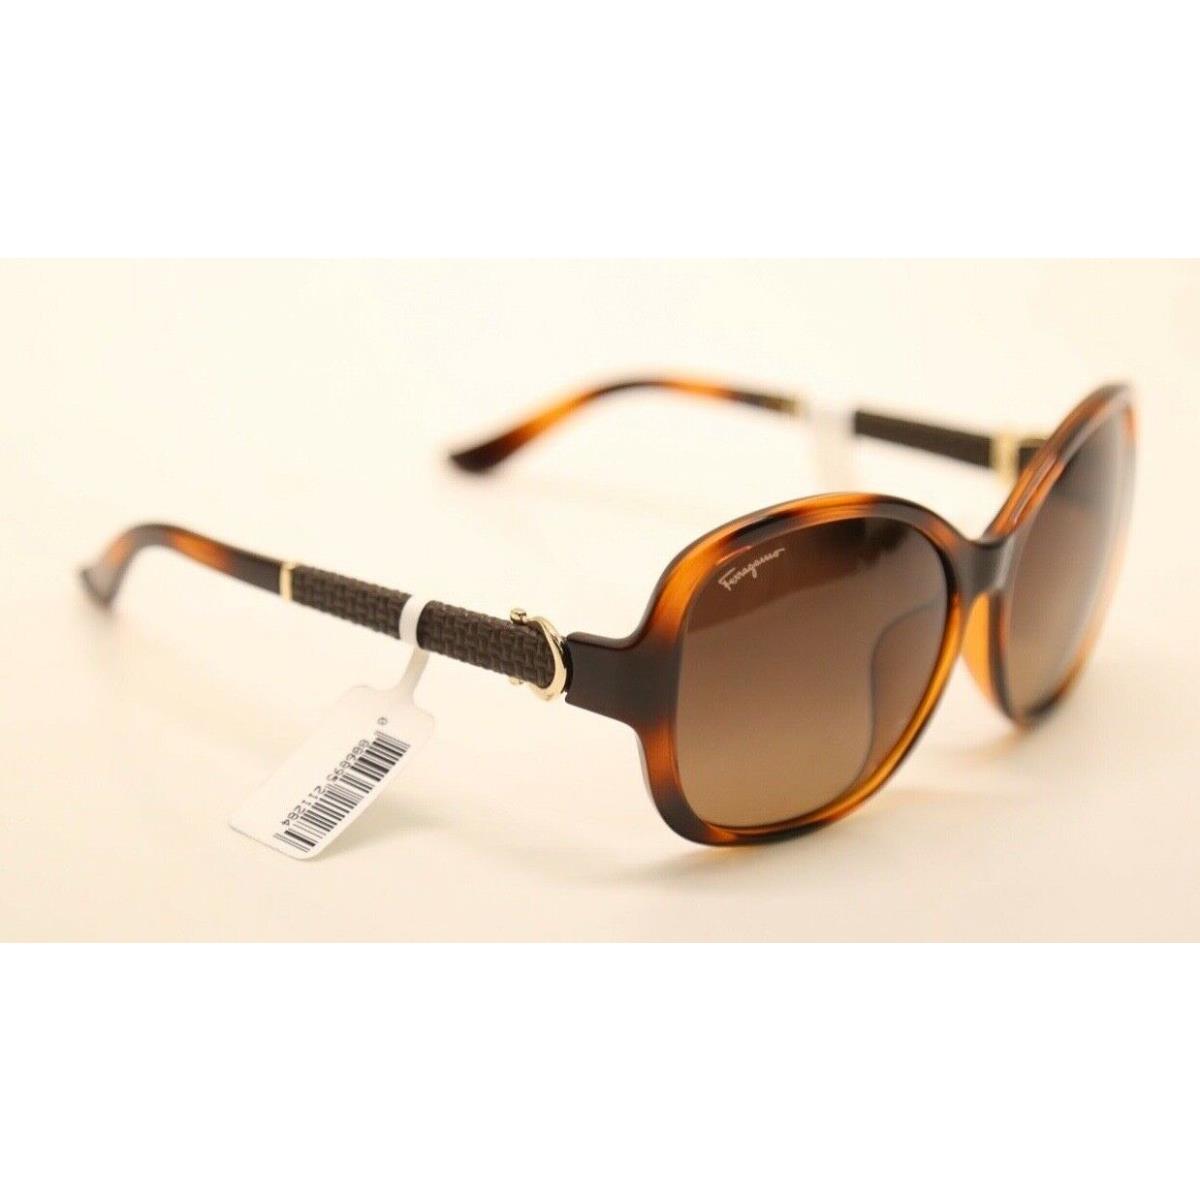 Salvatore Ferragamo sunglasses  - Tortoise Frame, Brown Lens 0